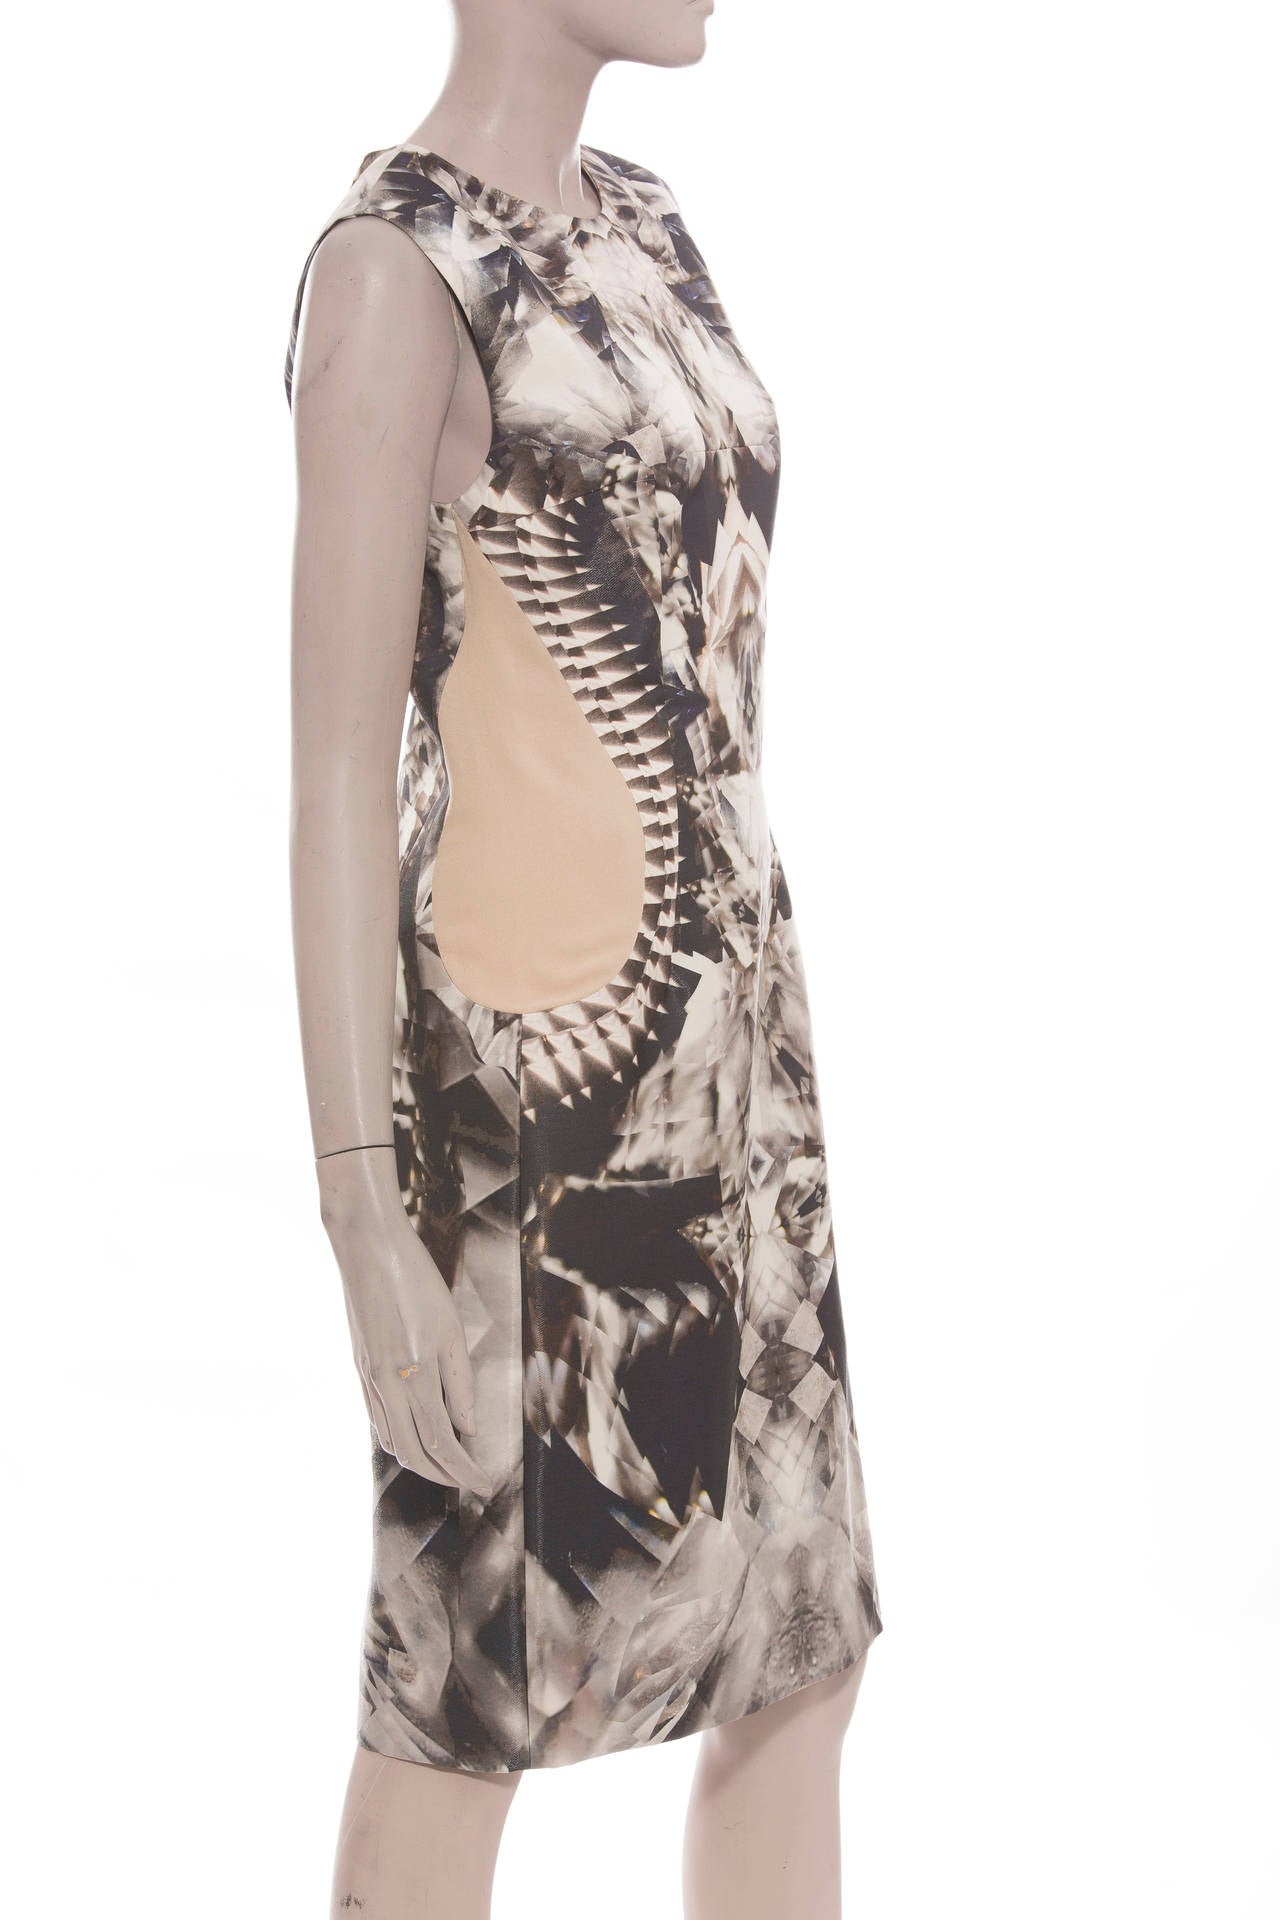 Alexander McQueen, Spring - Summer 2009 printed viscose sleeveless dress from the 